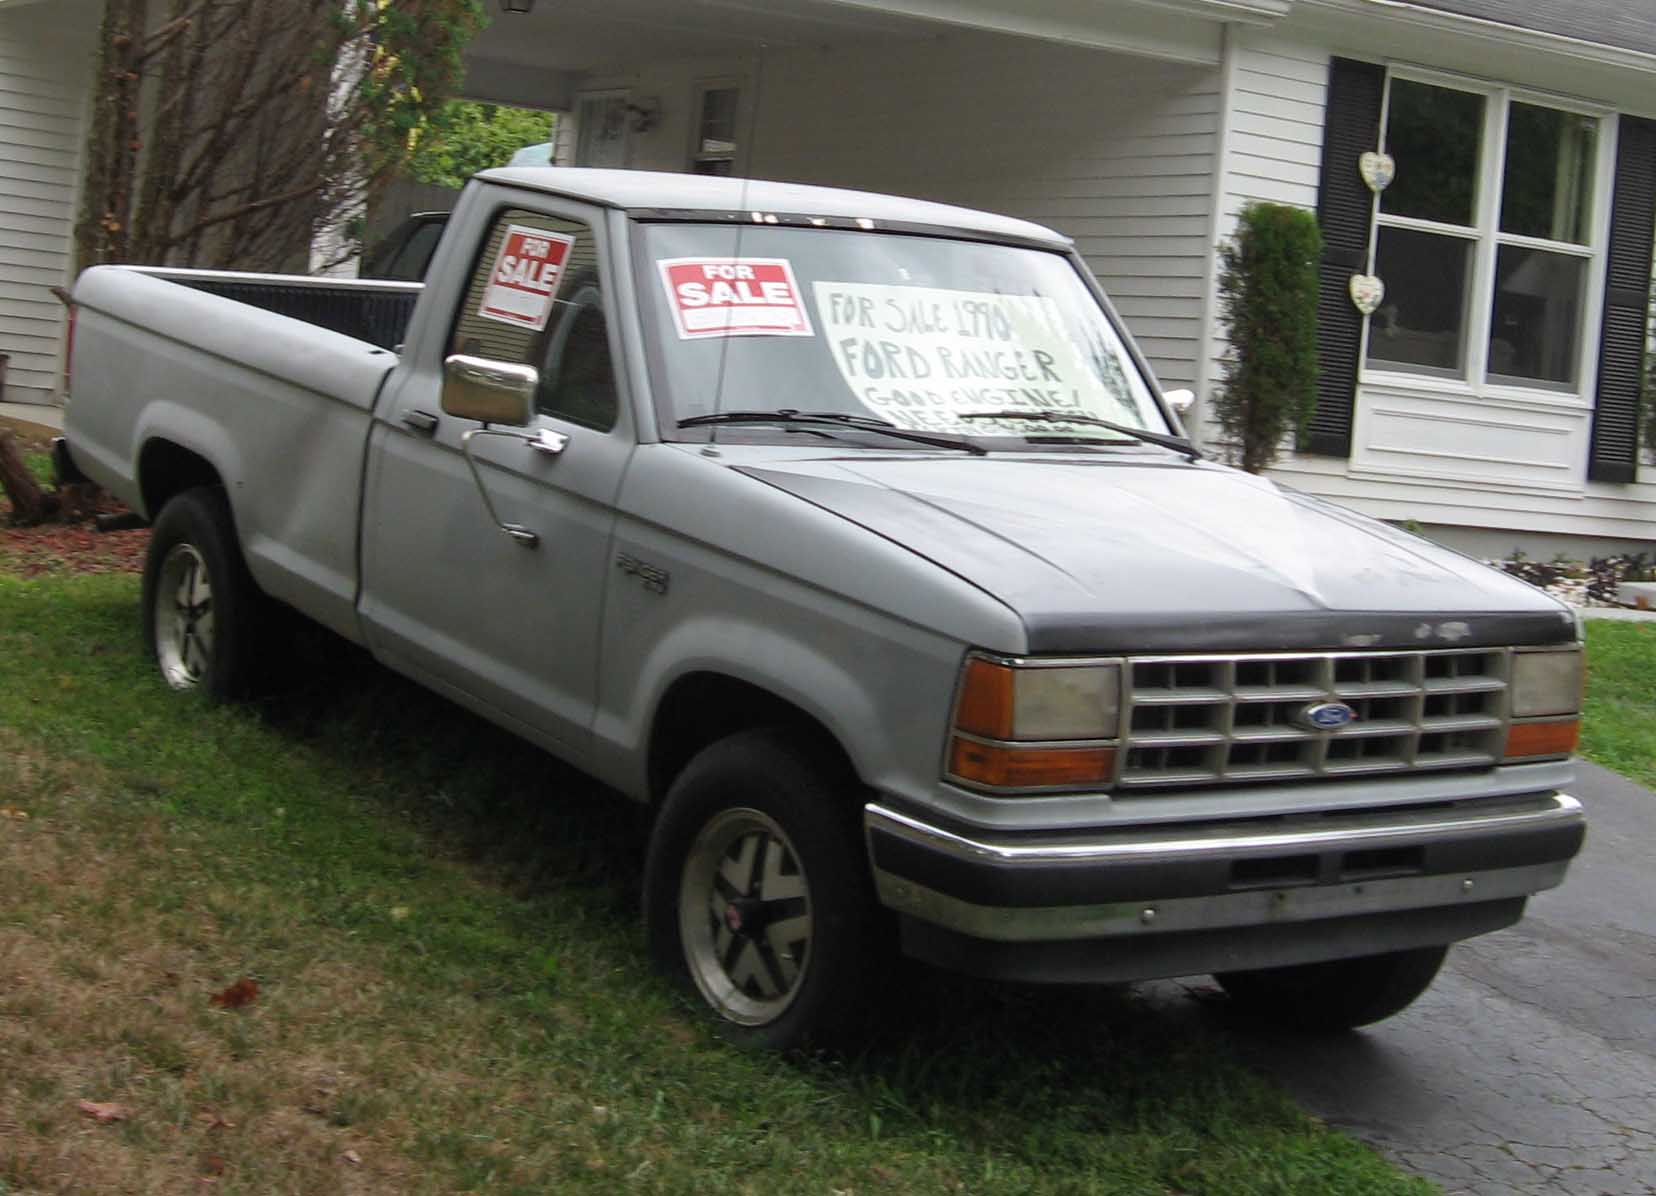 Ford Ranger (North America) I 1983 - 1988 Pickup #4